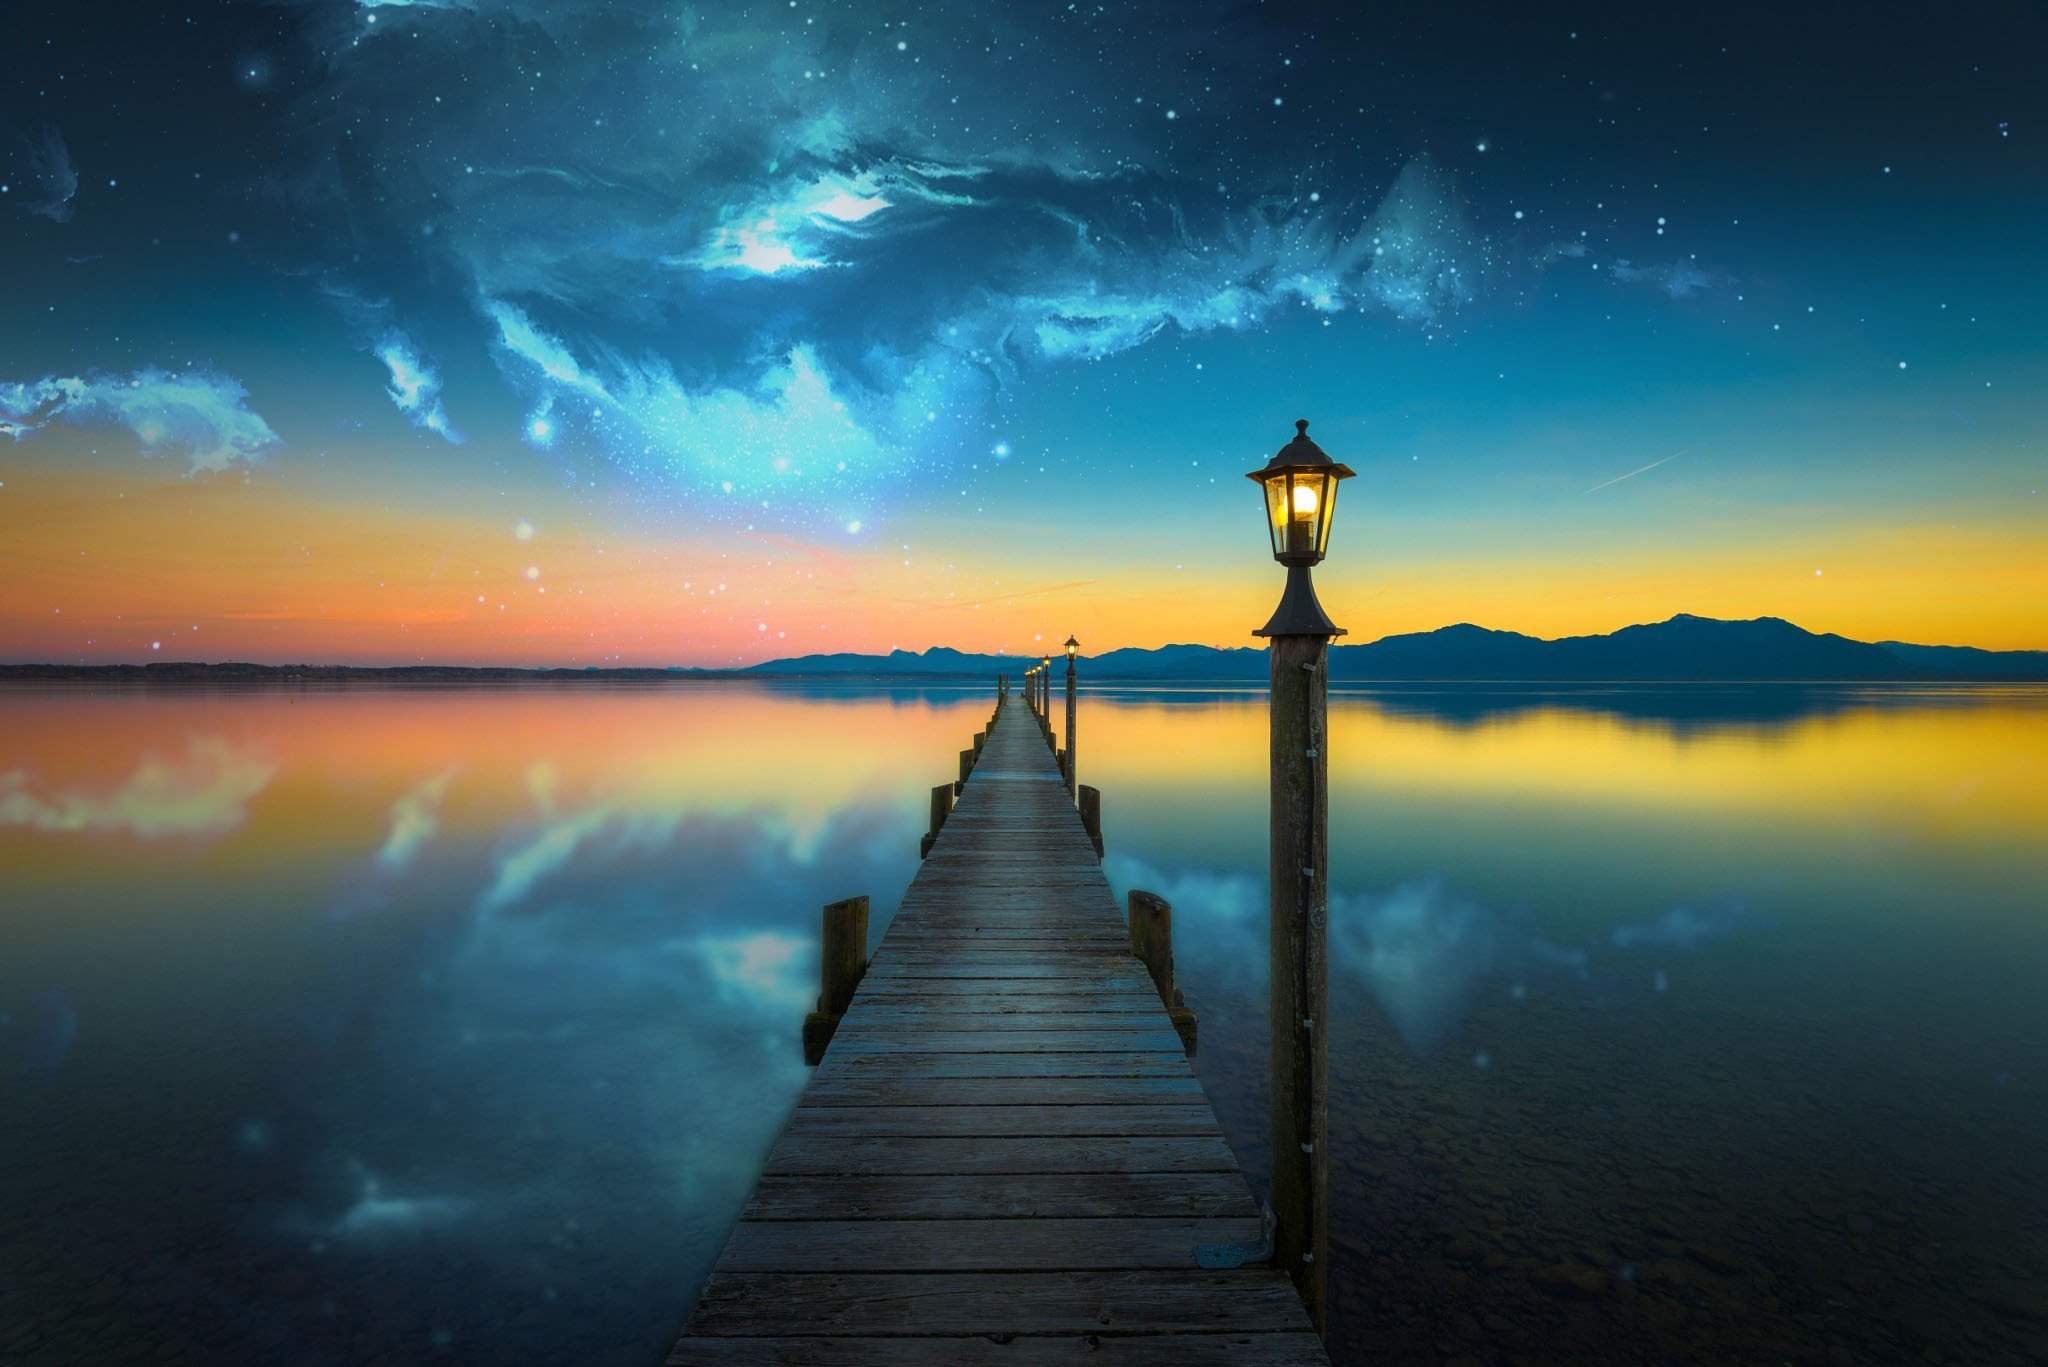 nebula, Space, Lake, Evening, Photo manipulation, Bridge, Water Wallpaper